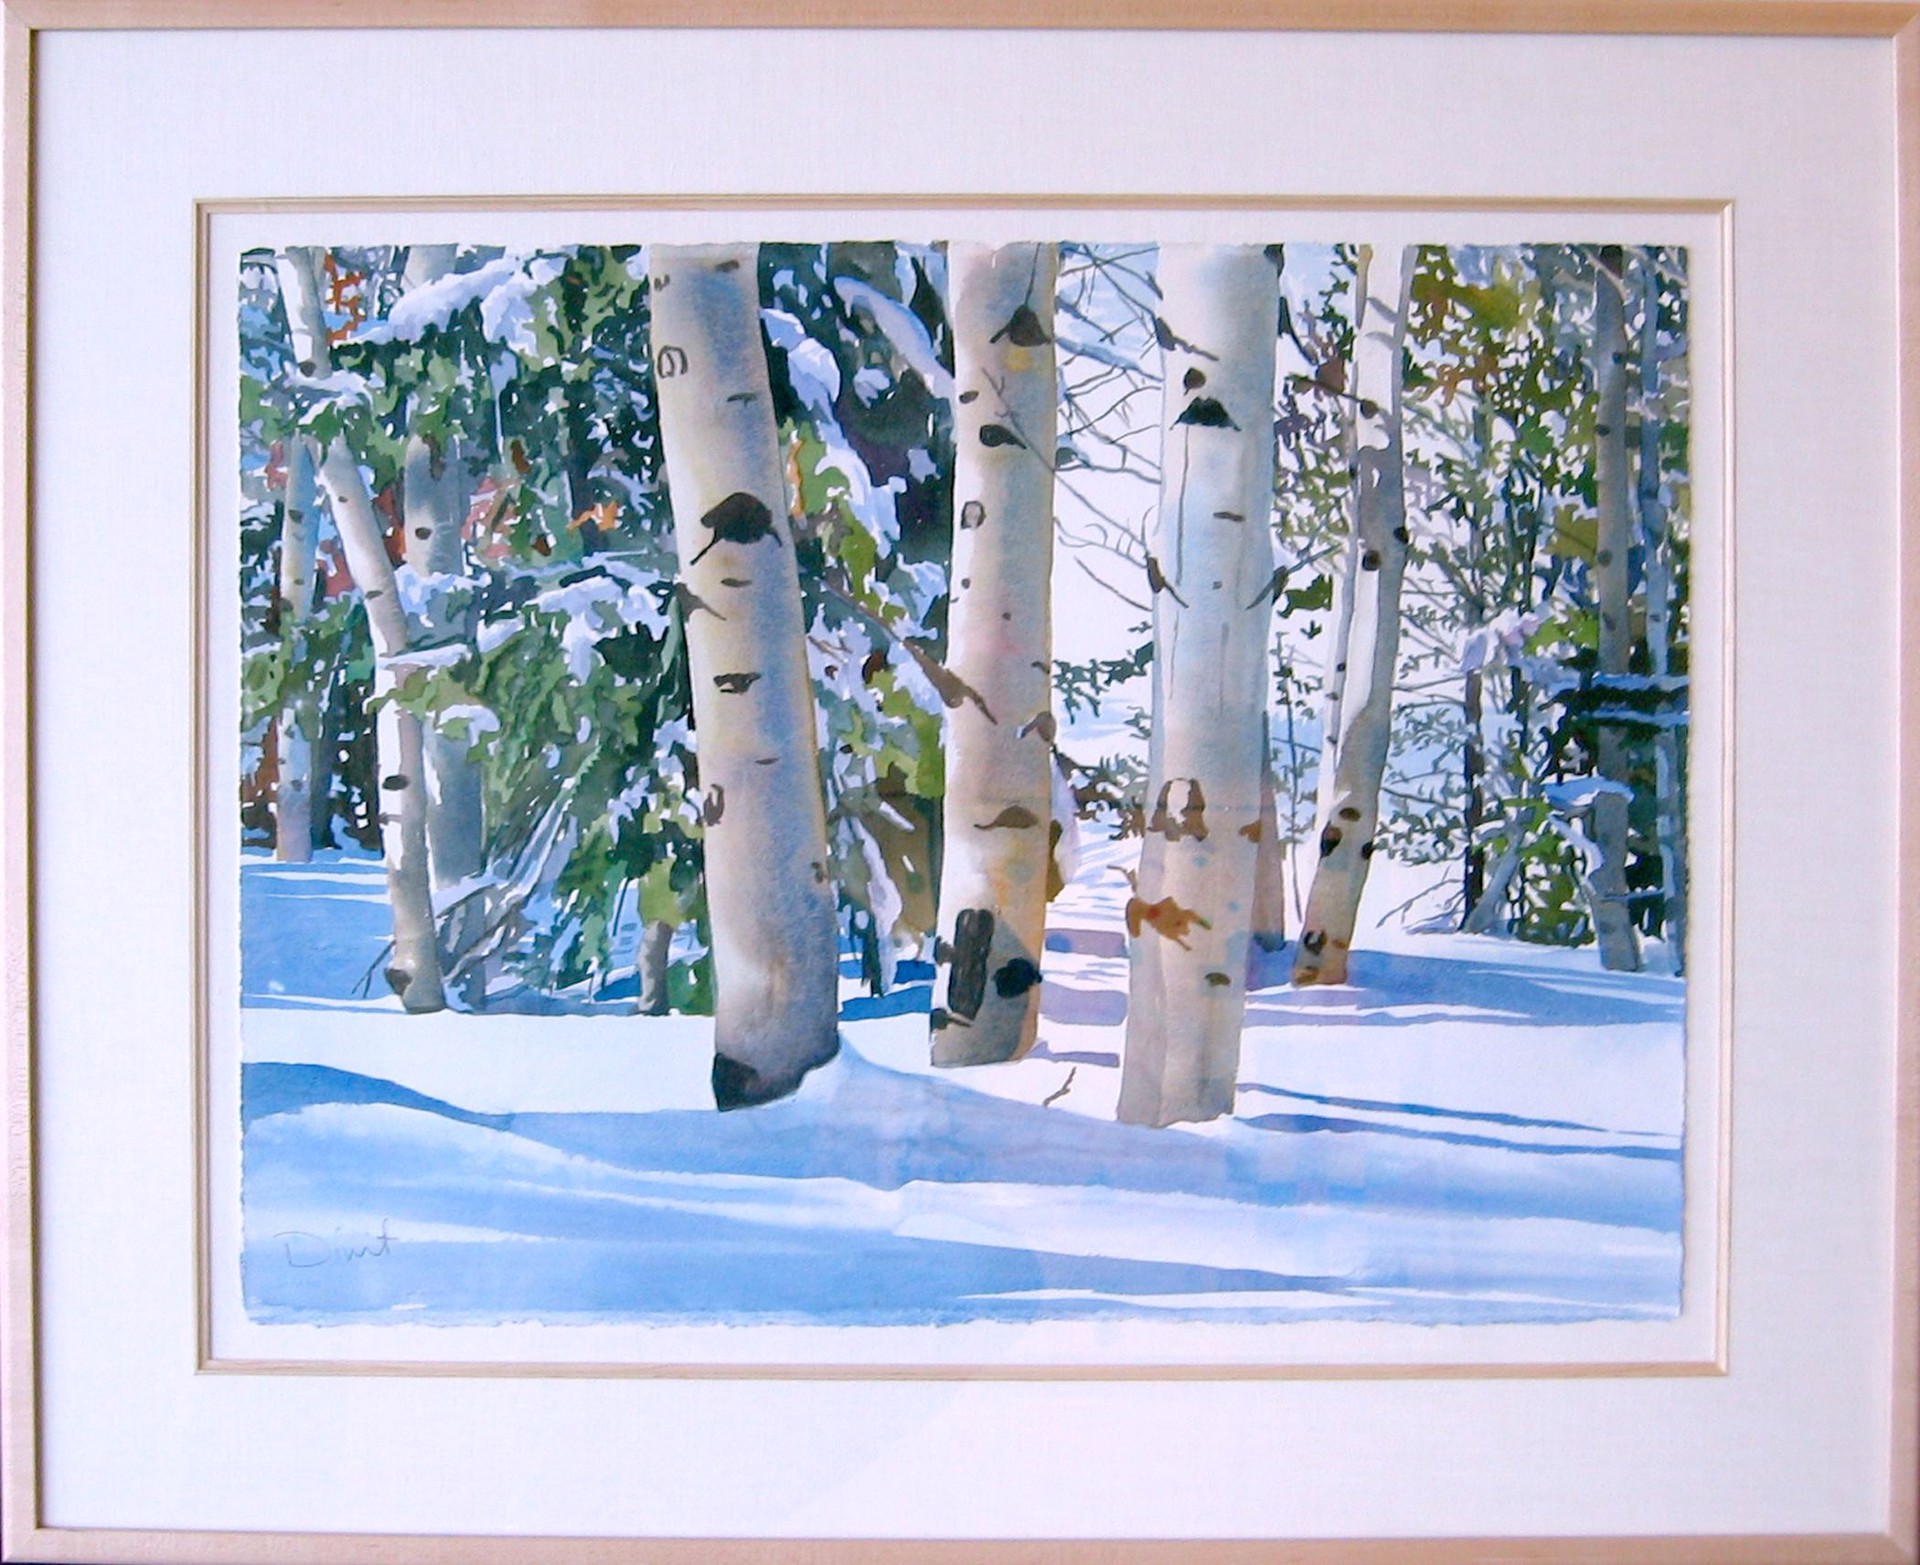 Winter Aspens (Snowshoe Trail) by Divit Cardoza